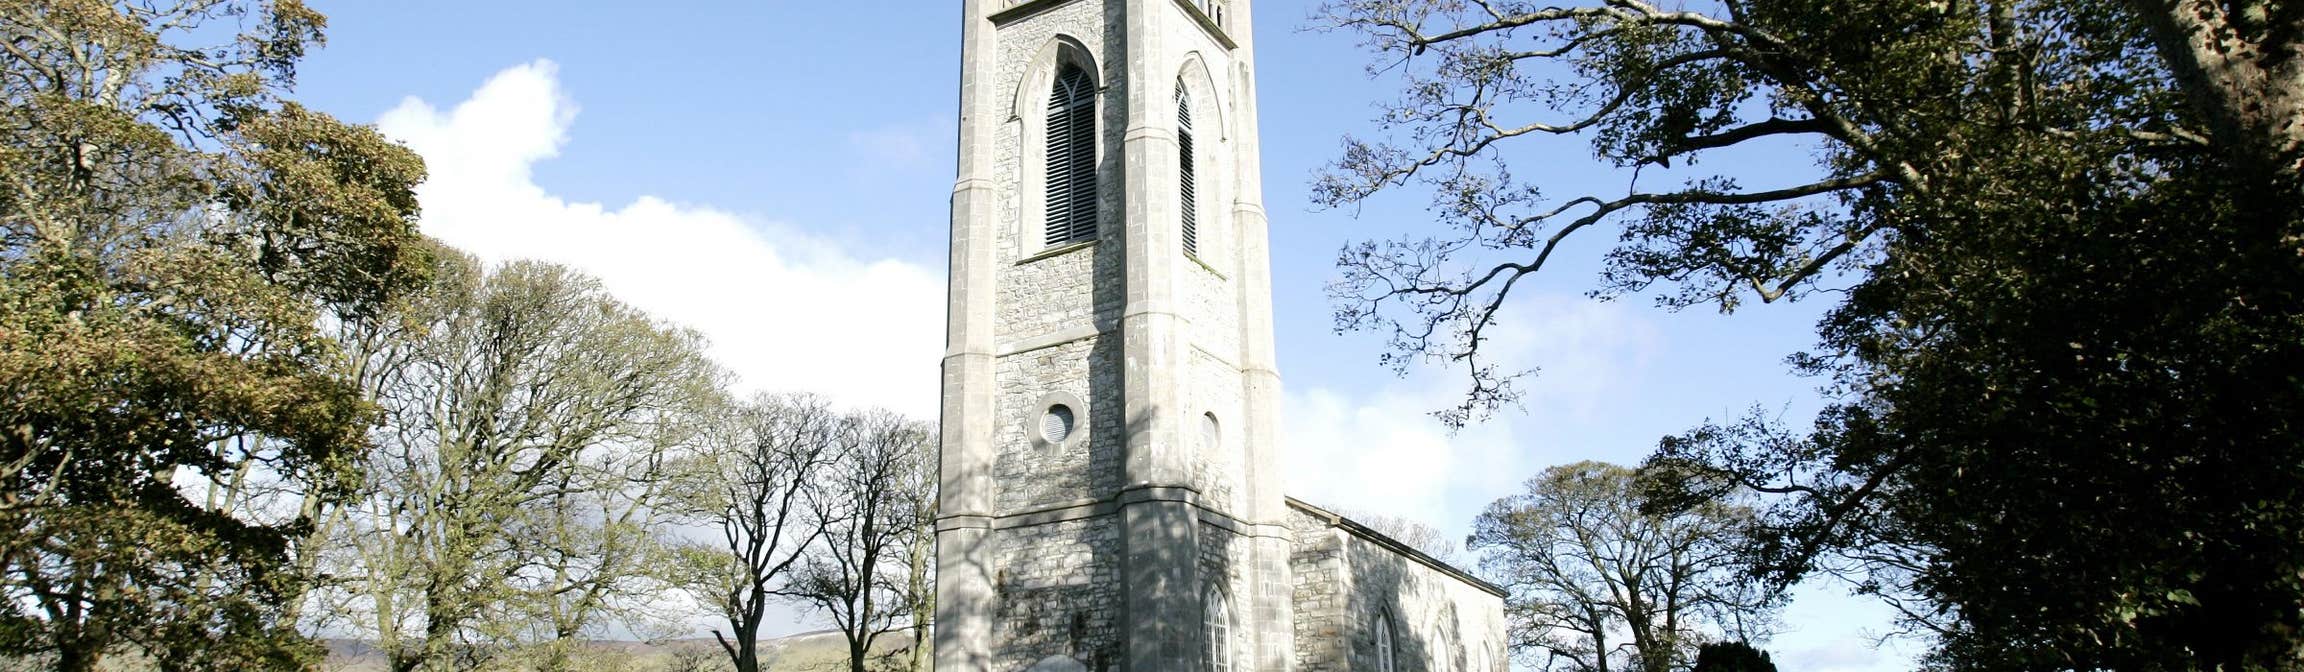 Image of a church in Drumcliffe in County Sligo